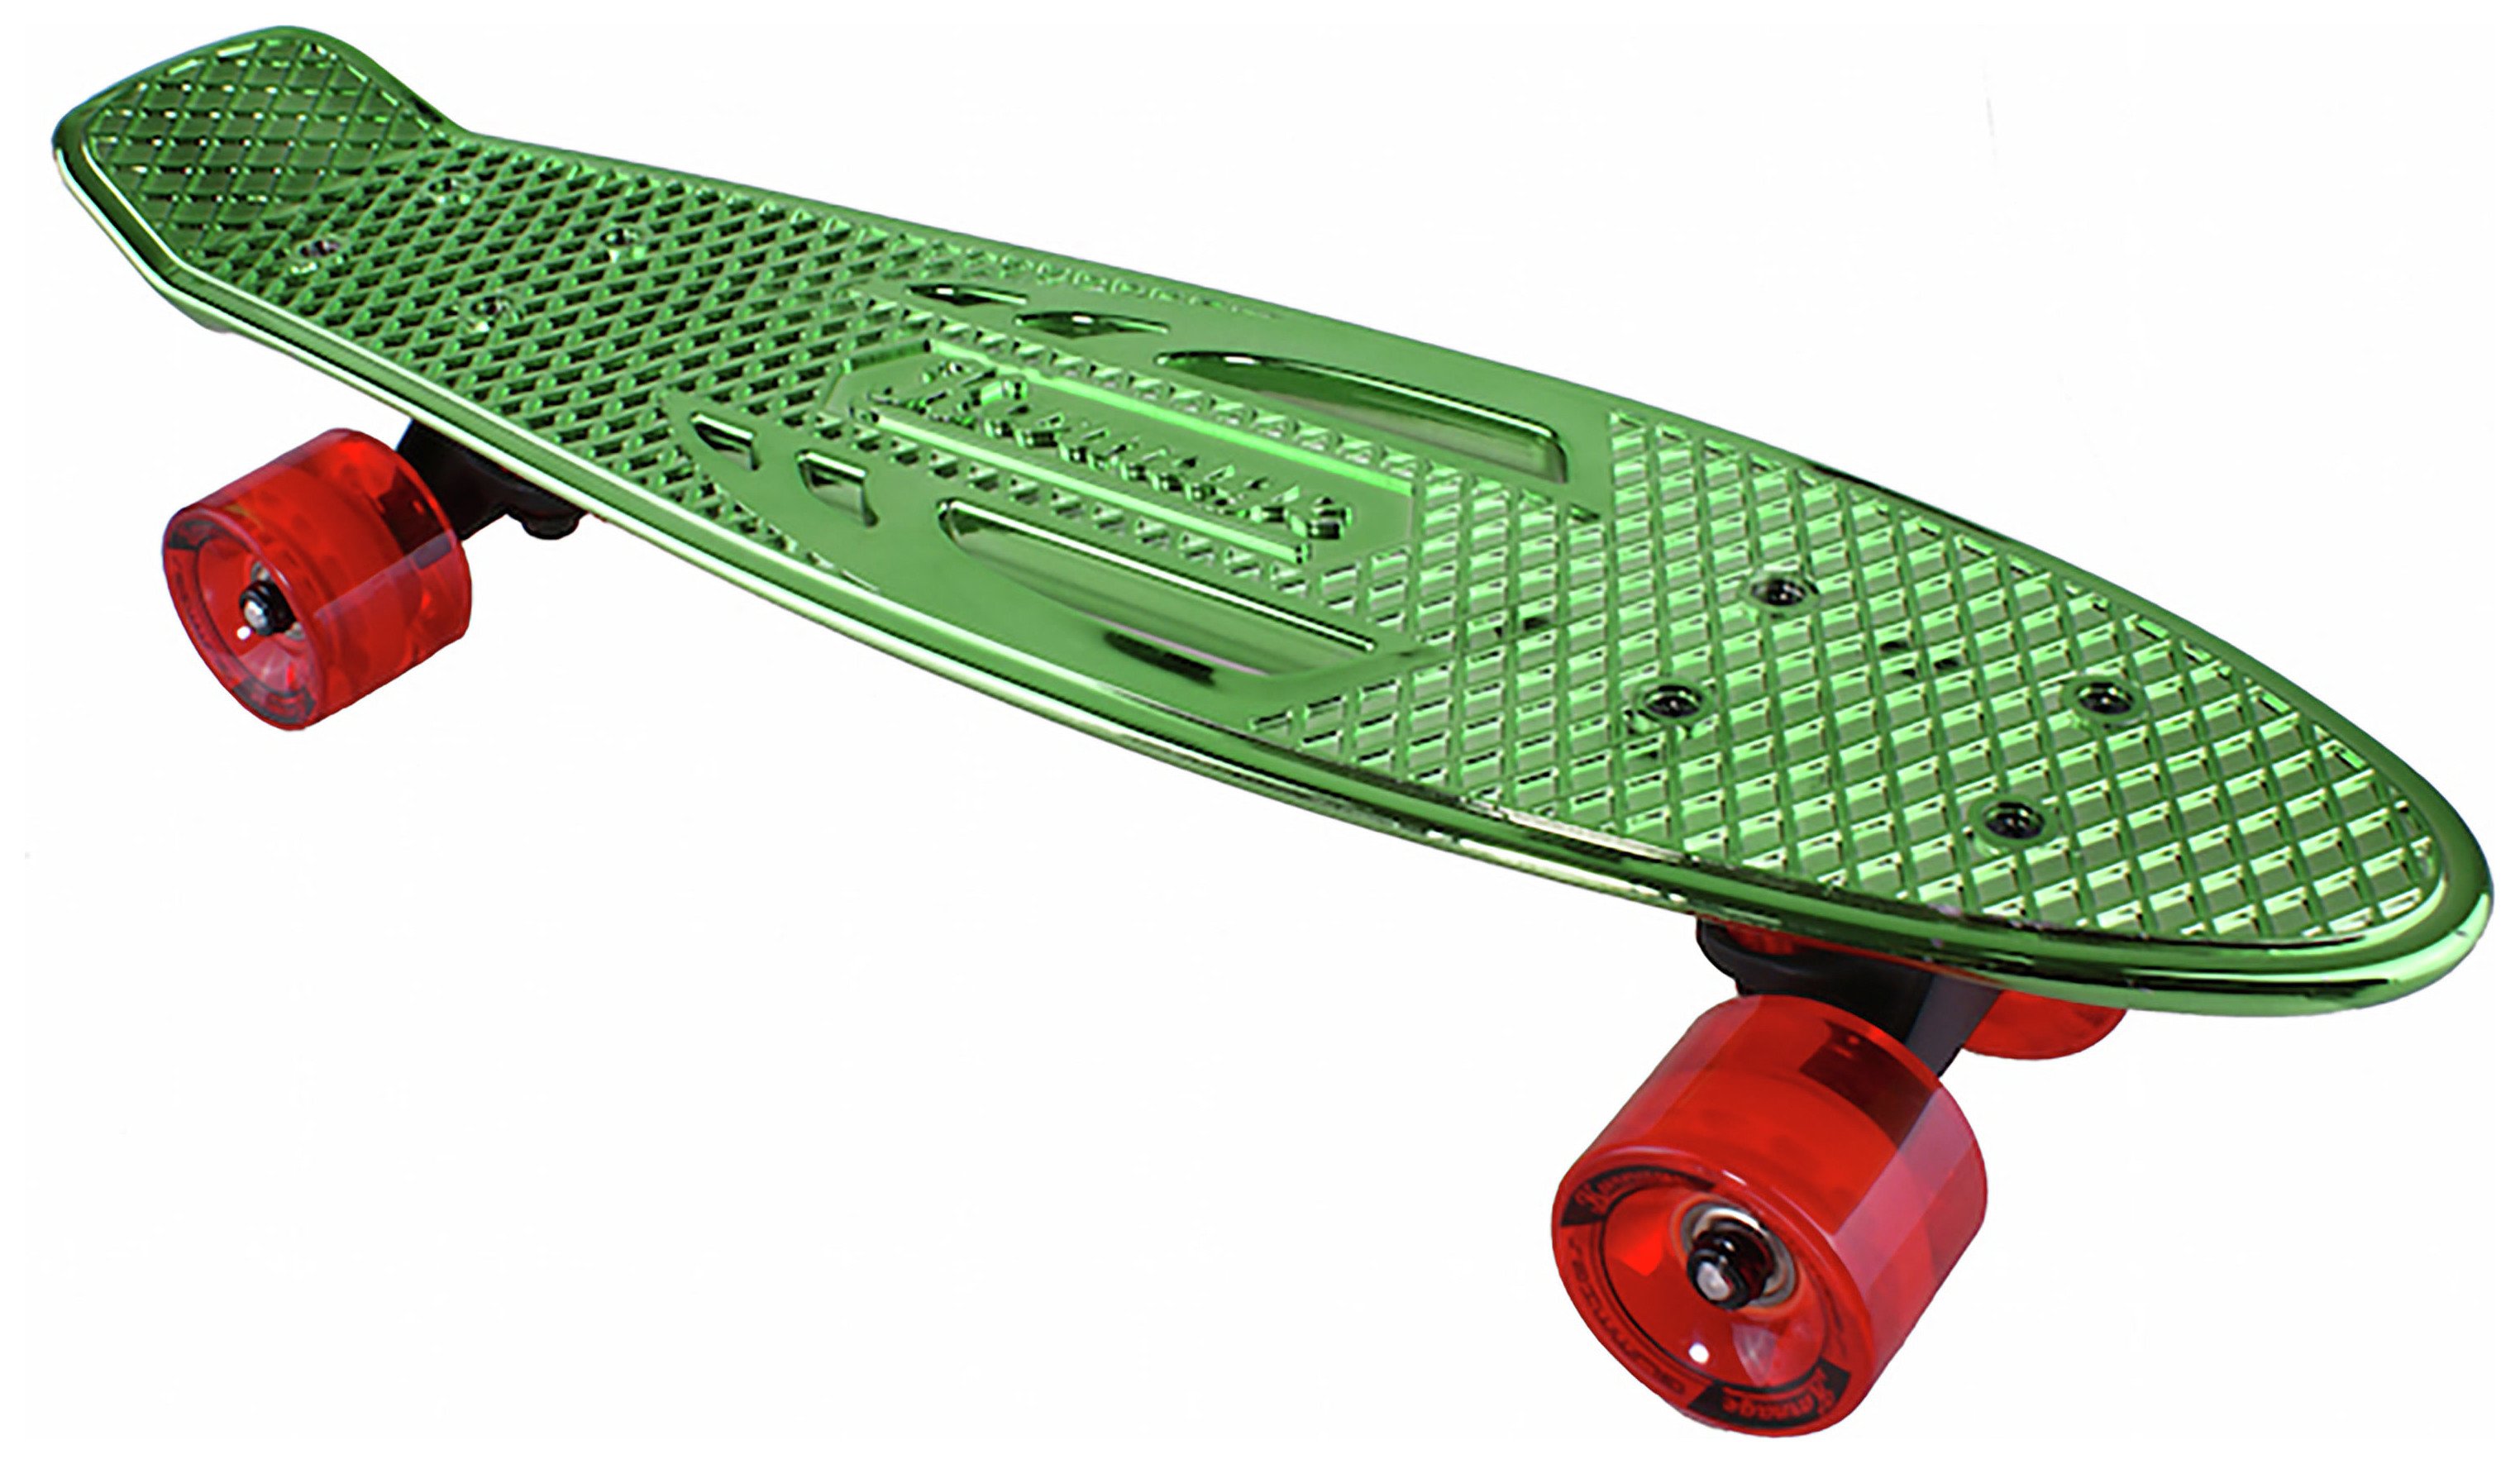 Karnage Retro Skateboard - Chrome and Green